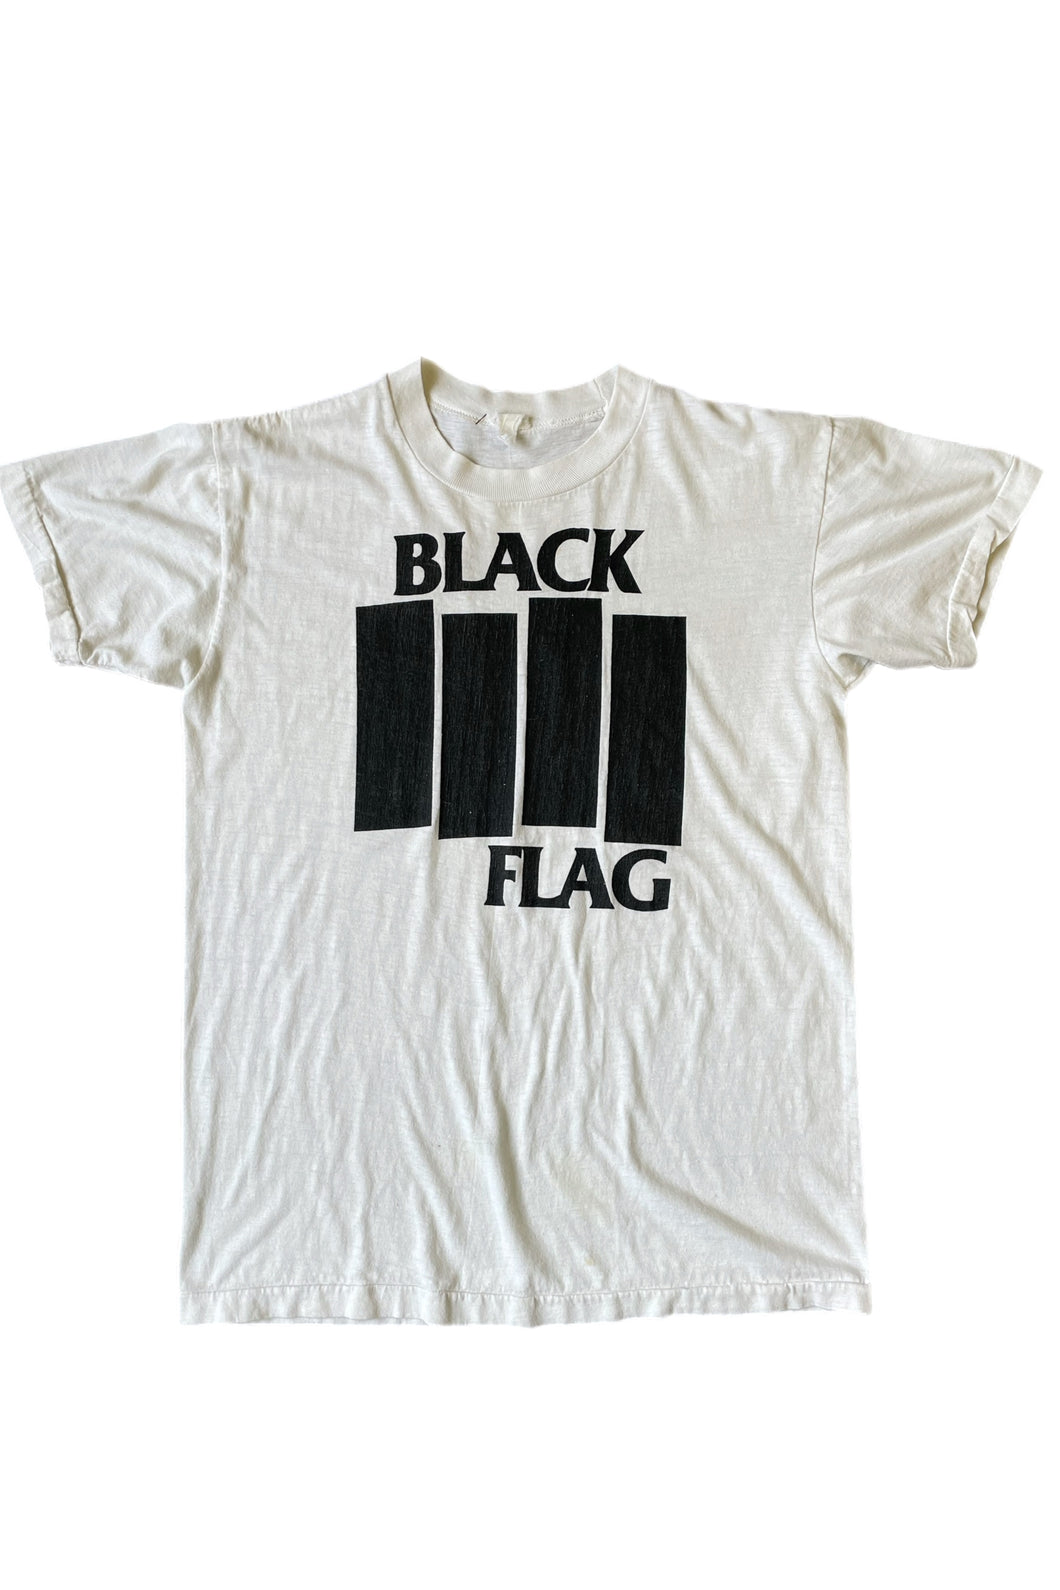 Vintage 1980's Black Flag soft and thin T-Shirt